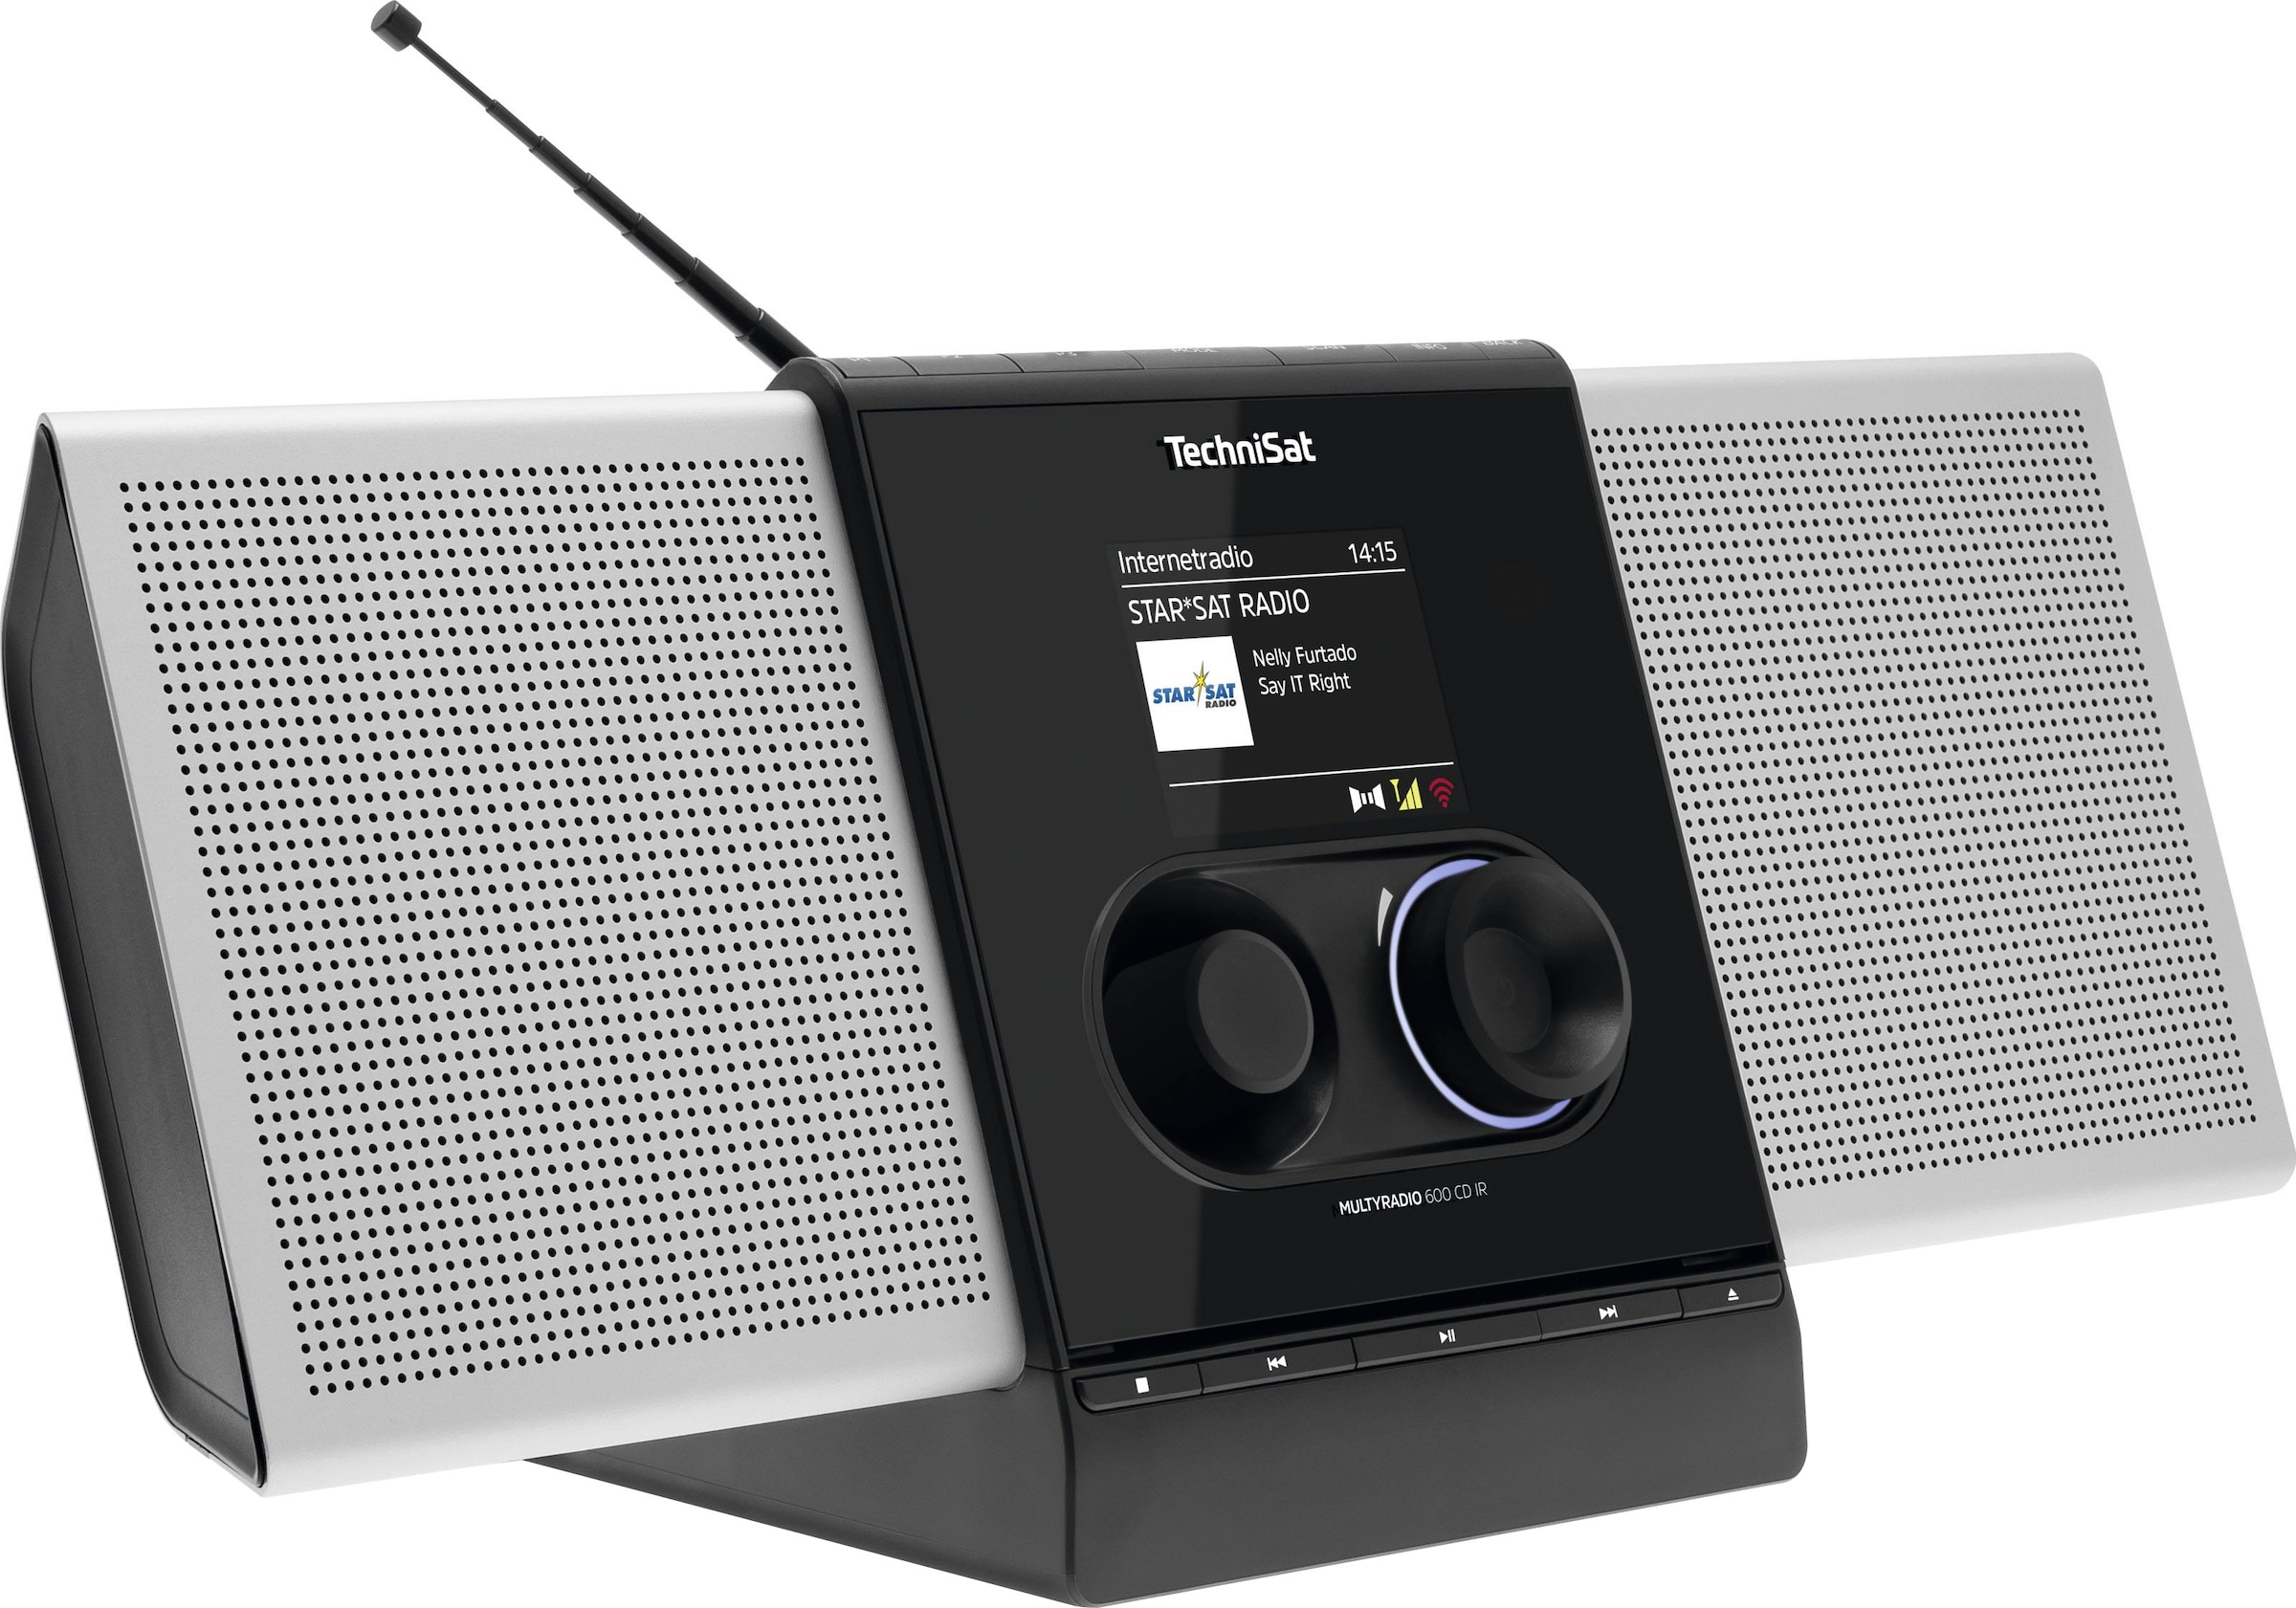 TechniSat Radio »MULTYRADIO 600 CD IR«, (Bluetooth-WLAN Internetradio-Digitalradio (DAB+)-UKW mit RDS 40 W)